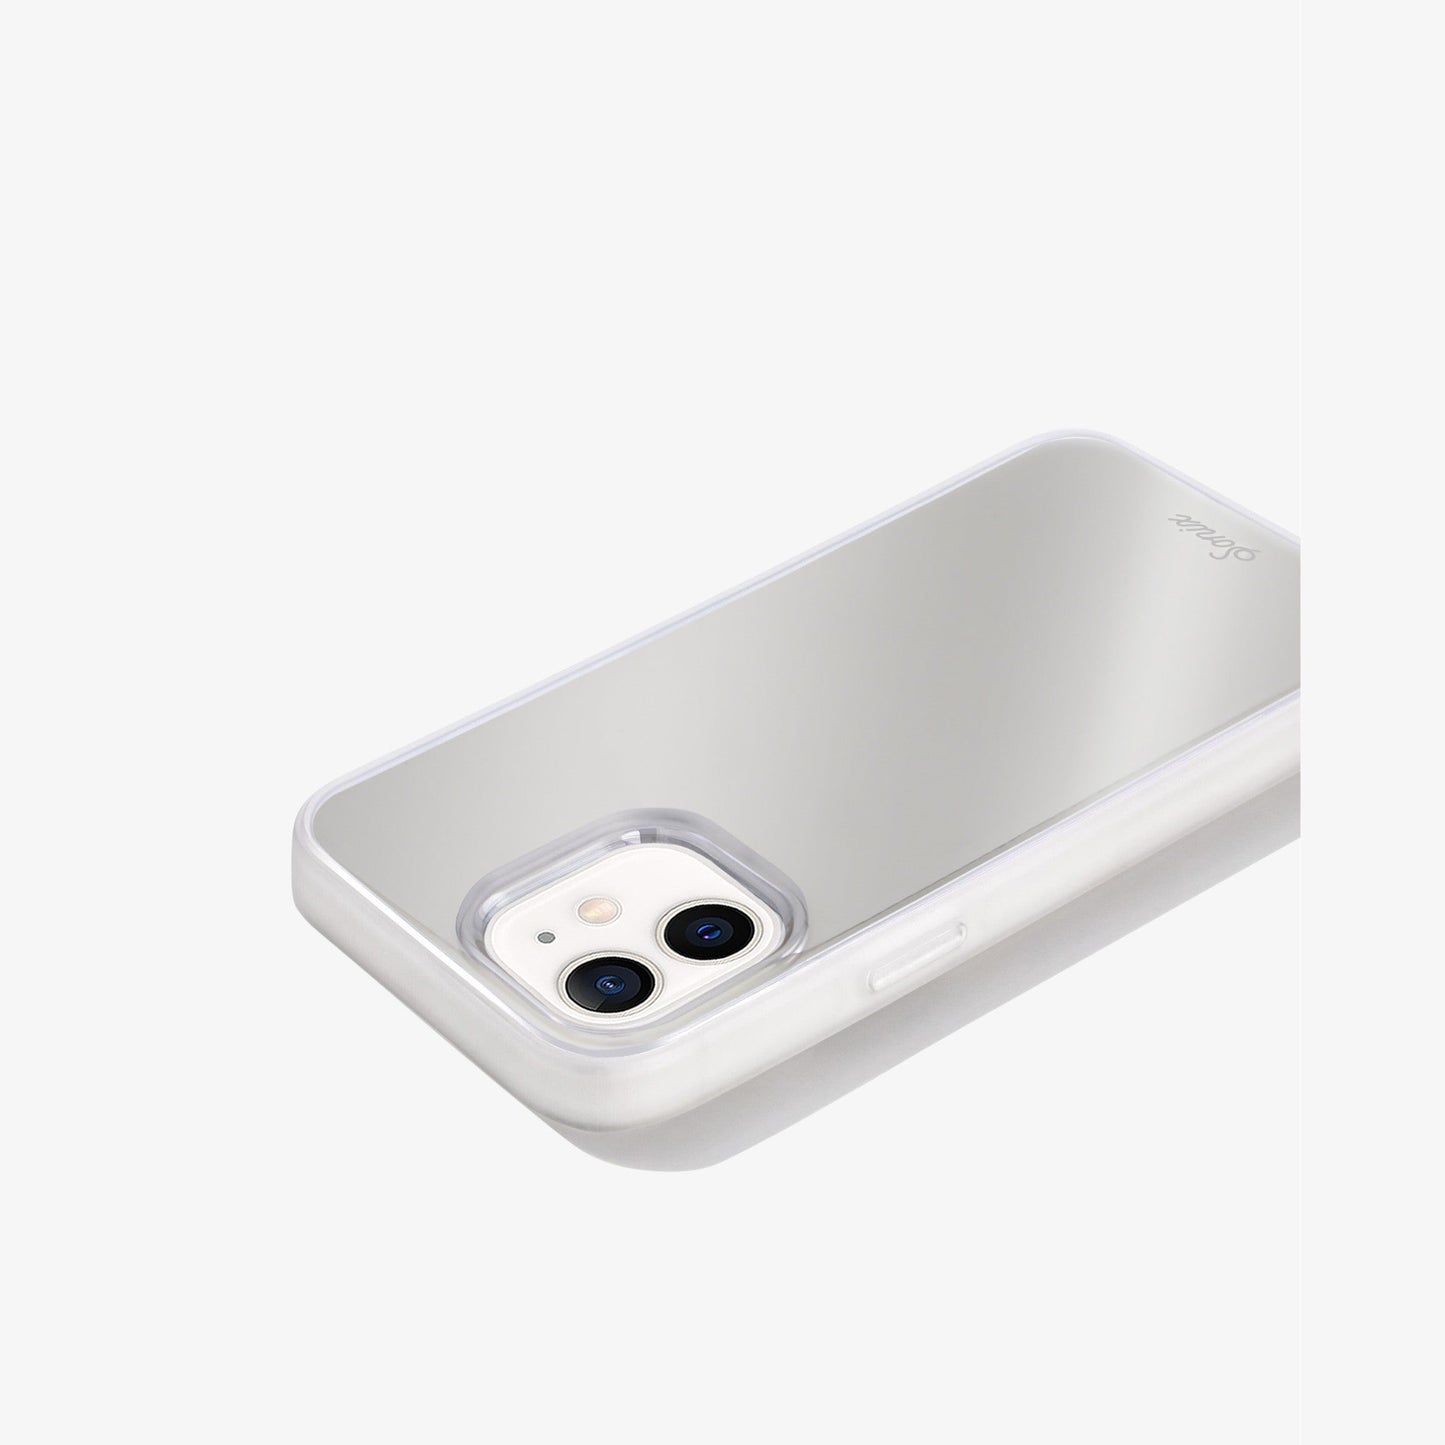 Silver Chrome iPhone 12 Mini Case